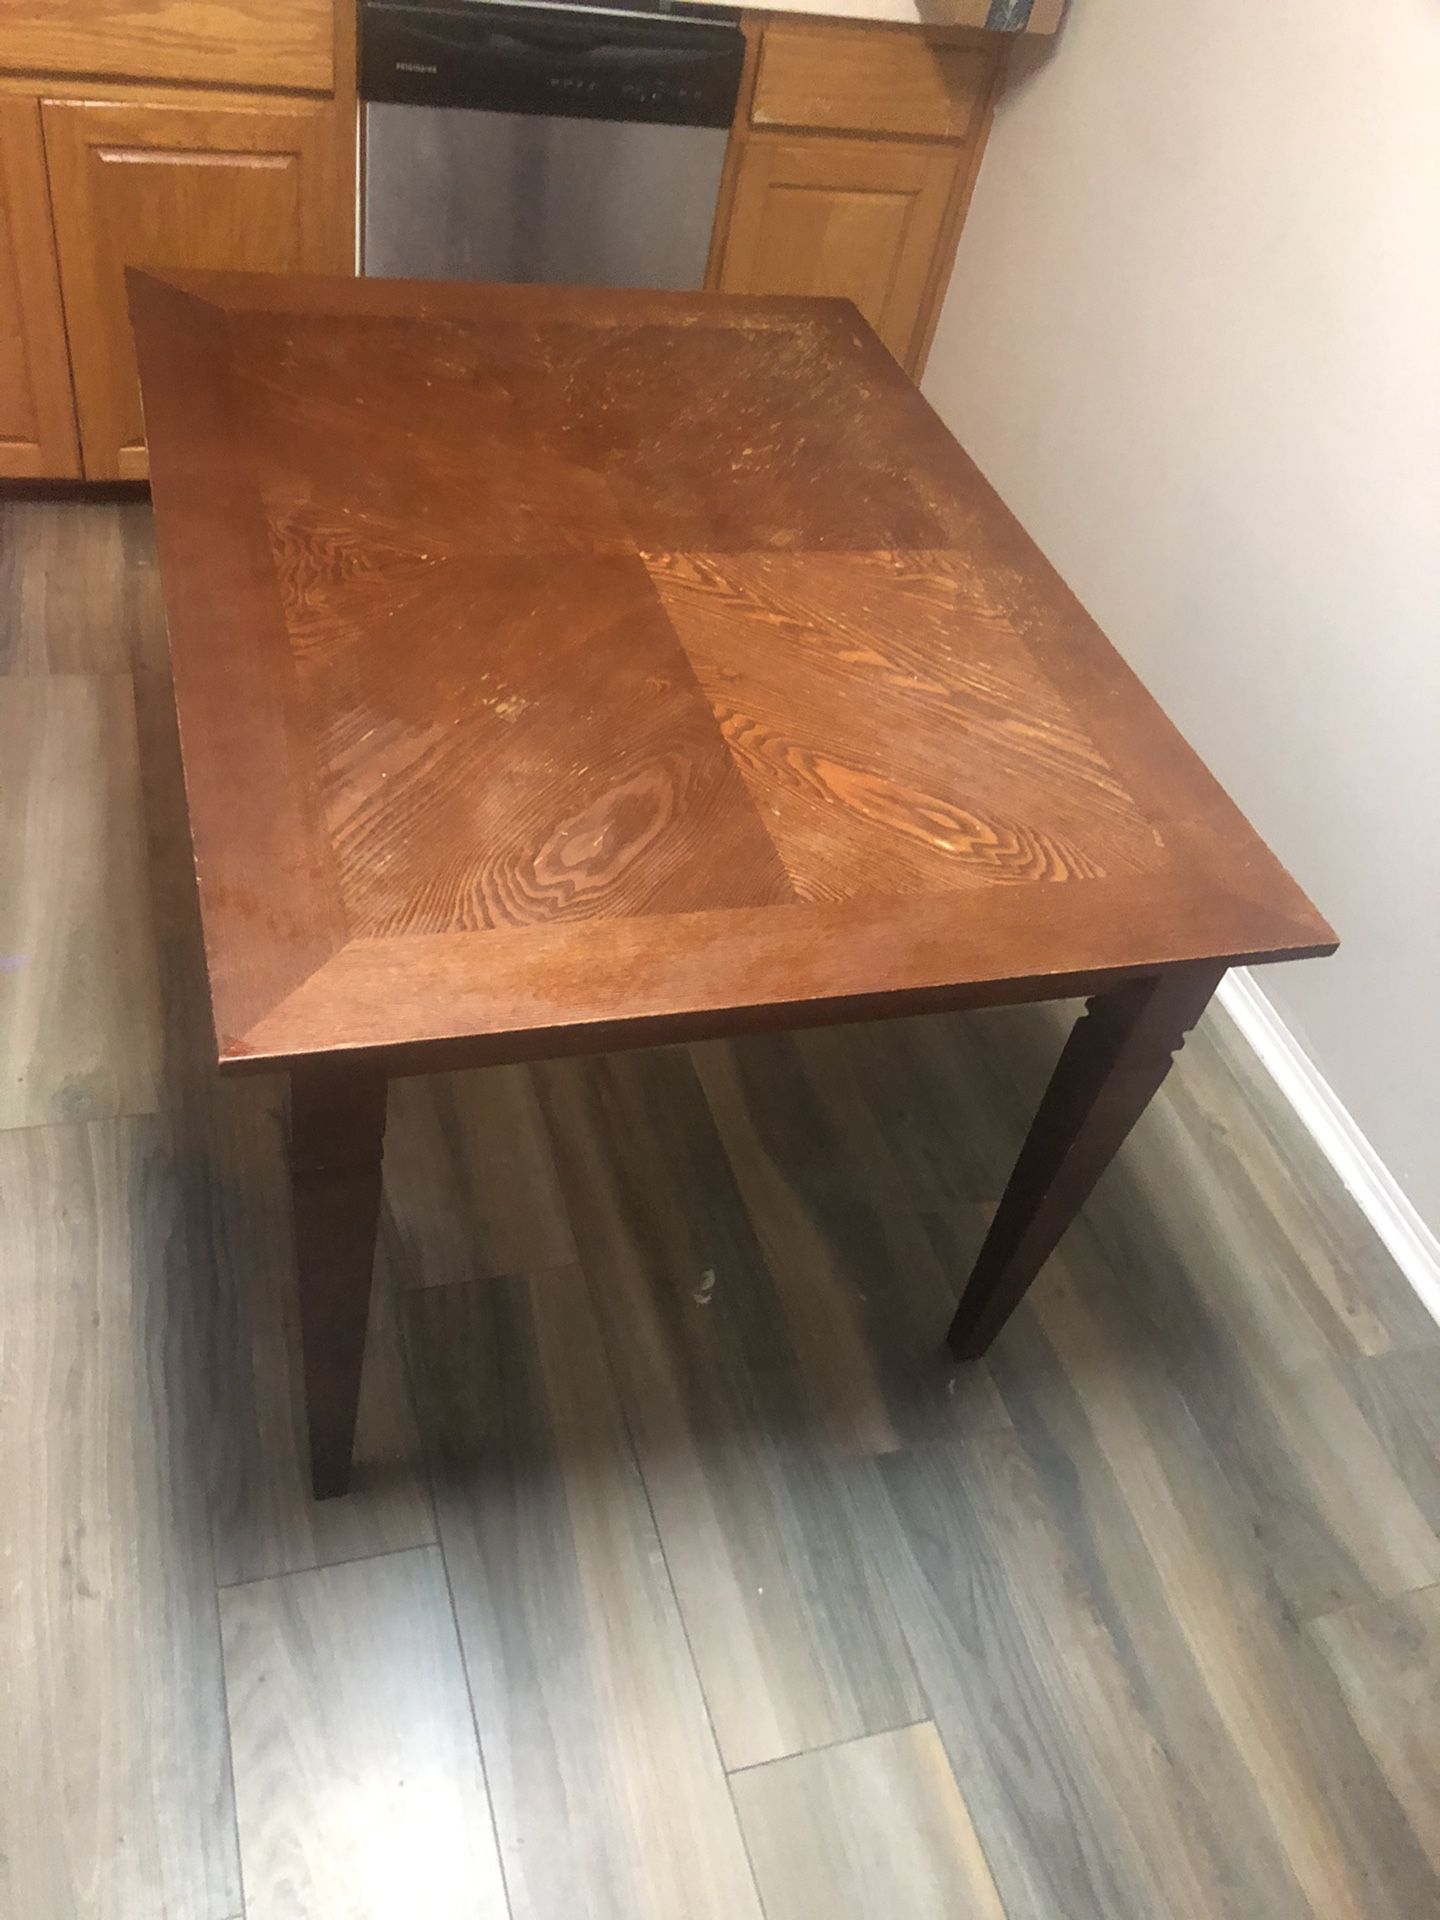 Sturdy wood table 3x4 feet - MAKE OFFER